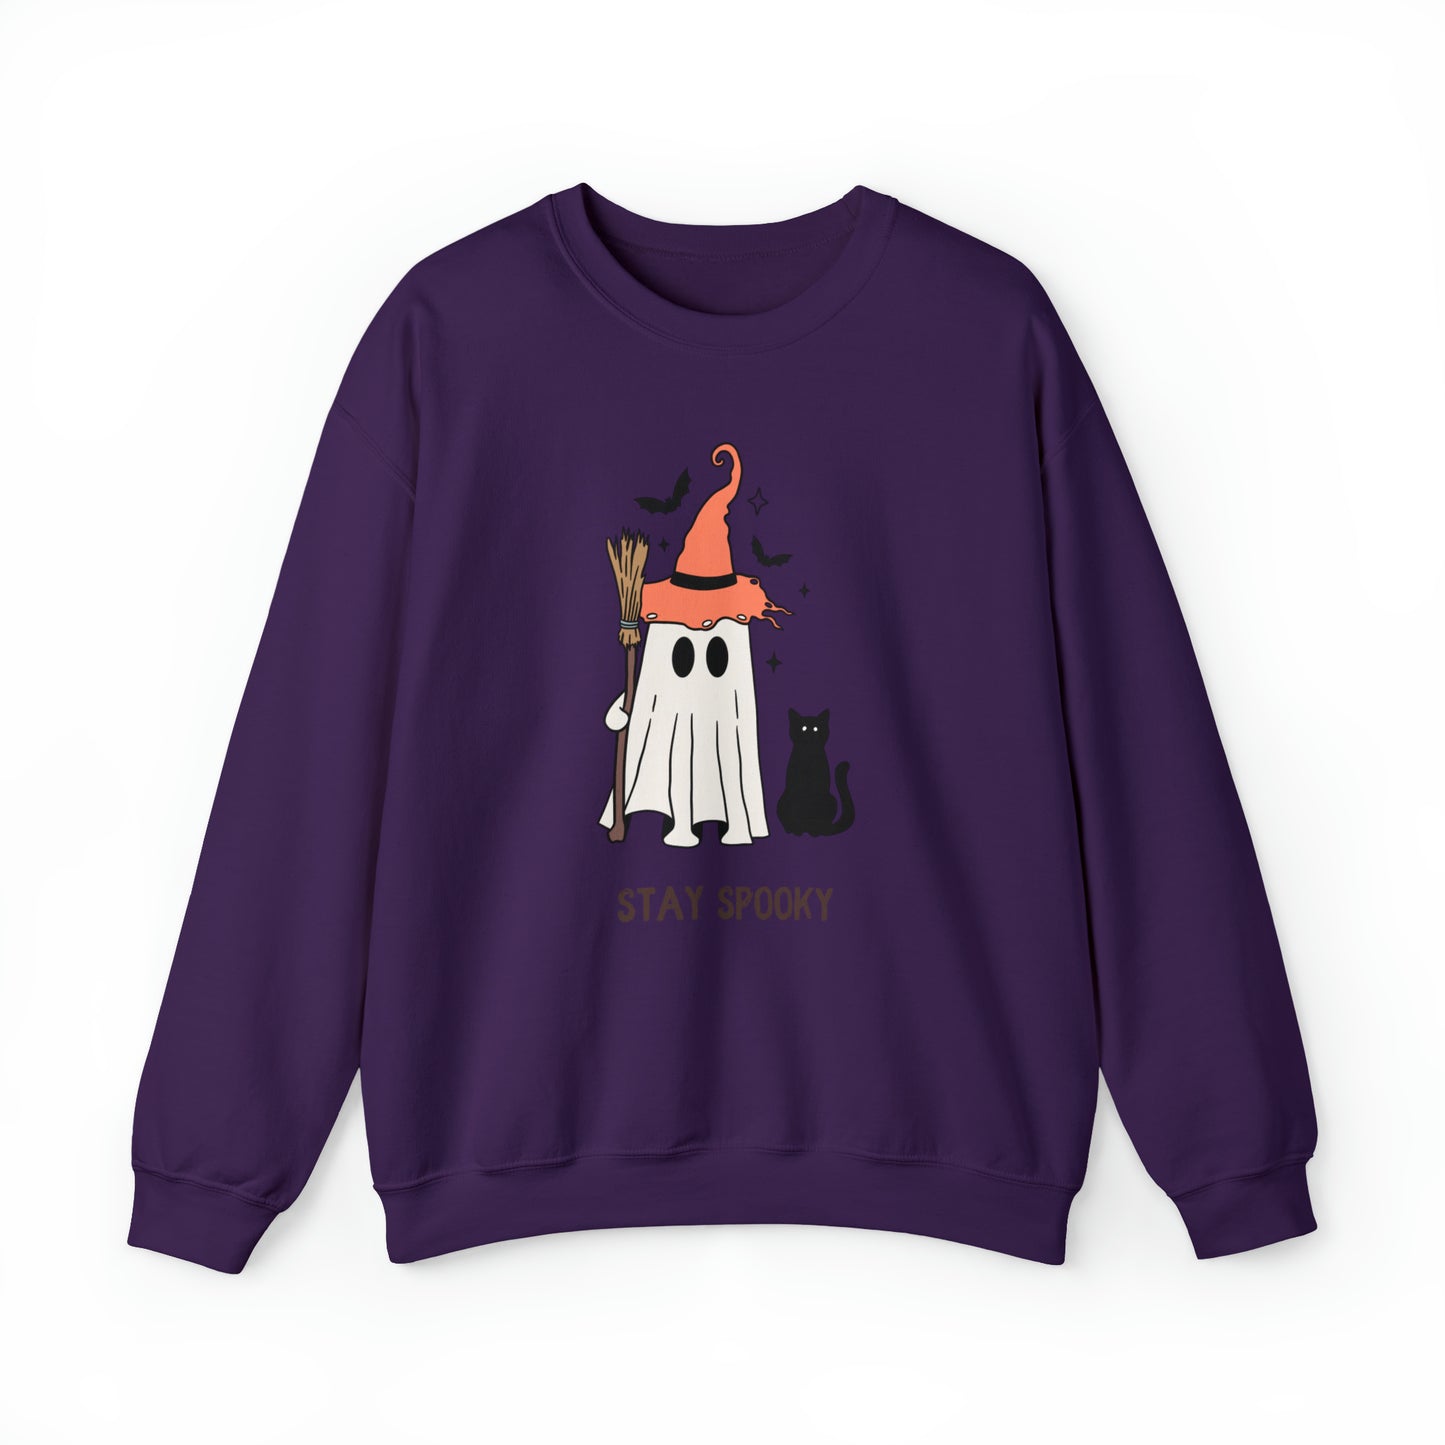 Stay Spooky Unisex Heavy Blend Crewneck Sweatshirt